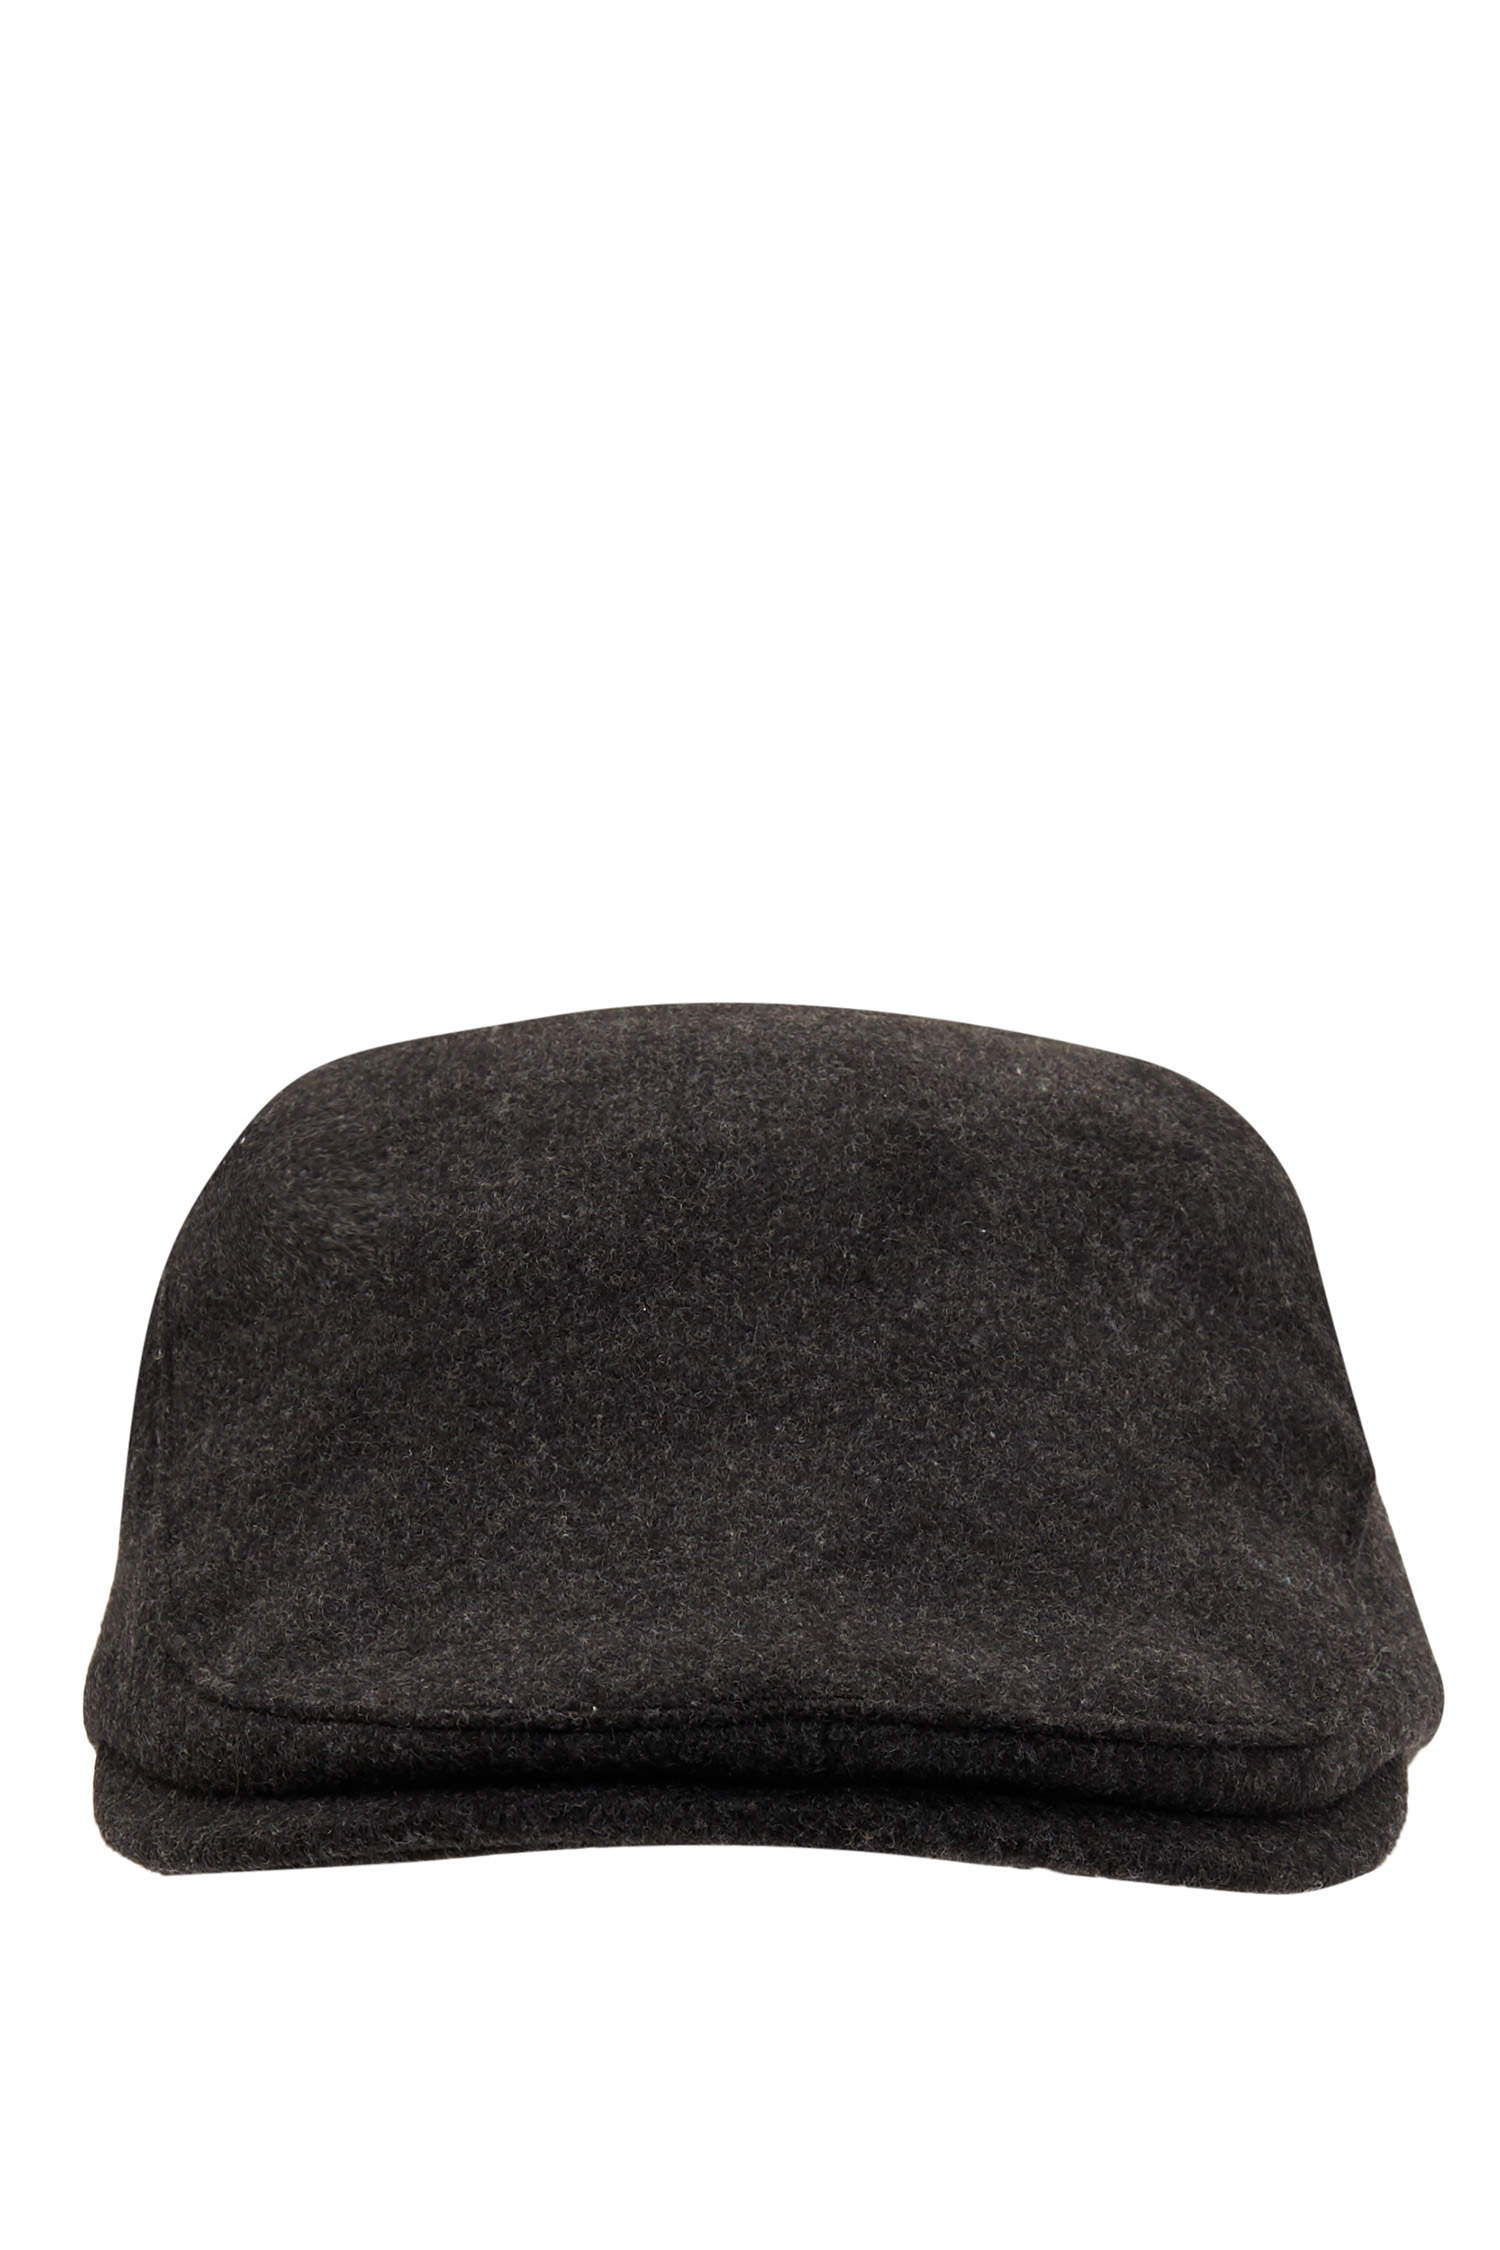 Defacto Kışlık Kasket Şapka. 1